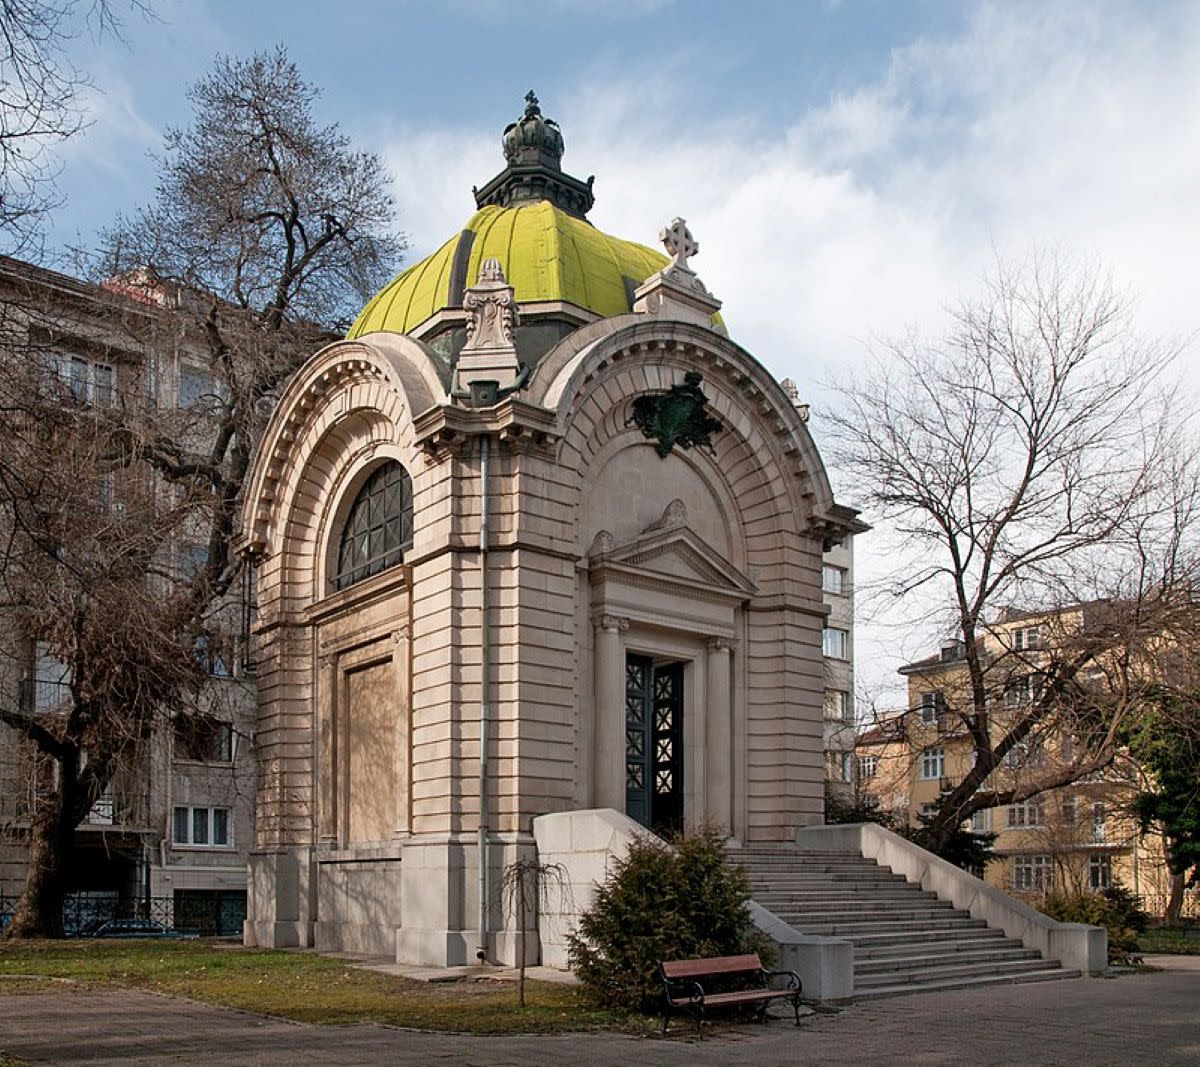 The Battenberg Mausoleum in Sofia, Bulgaria.